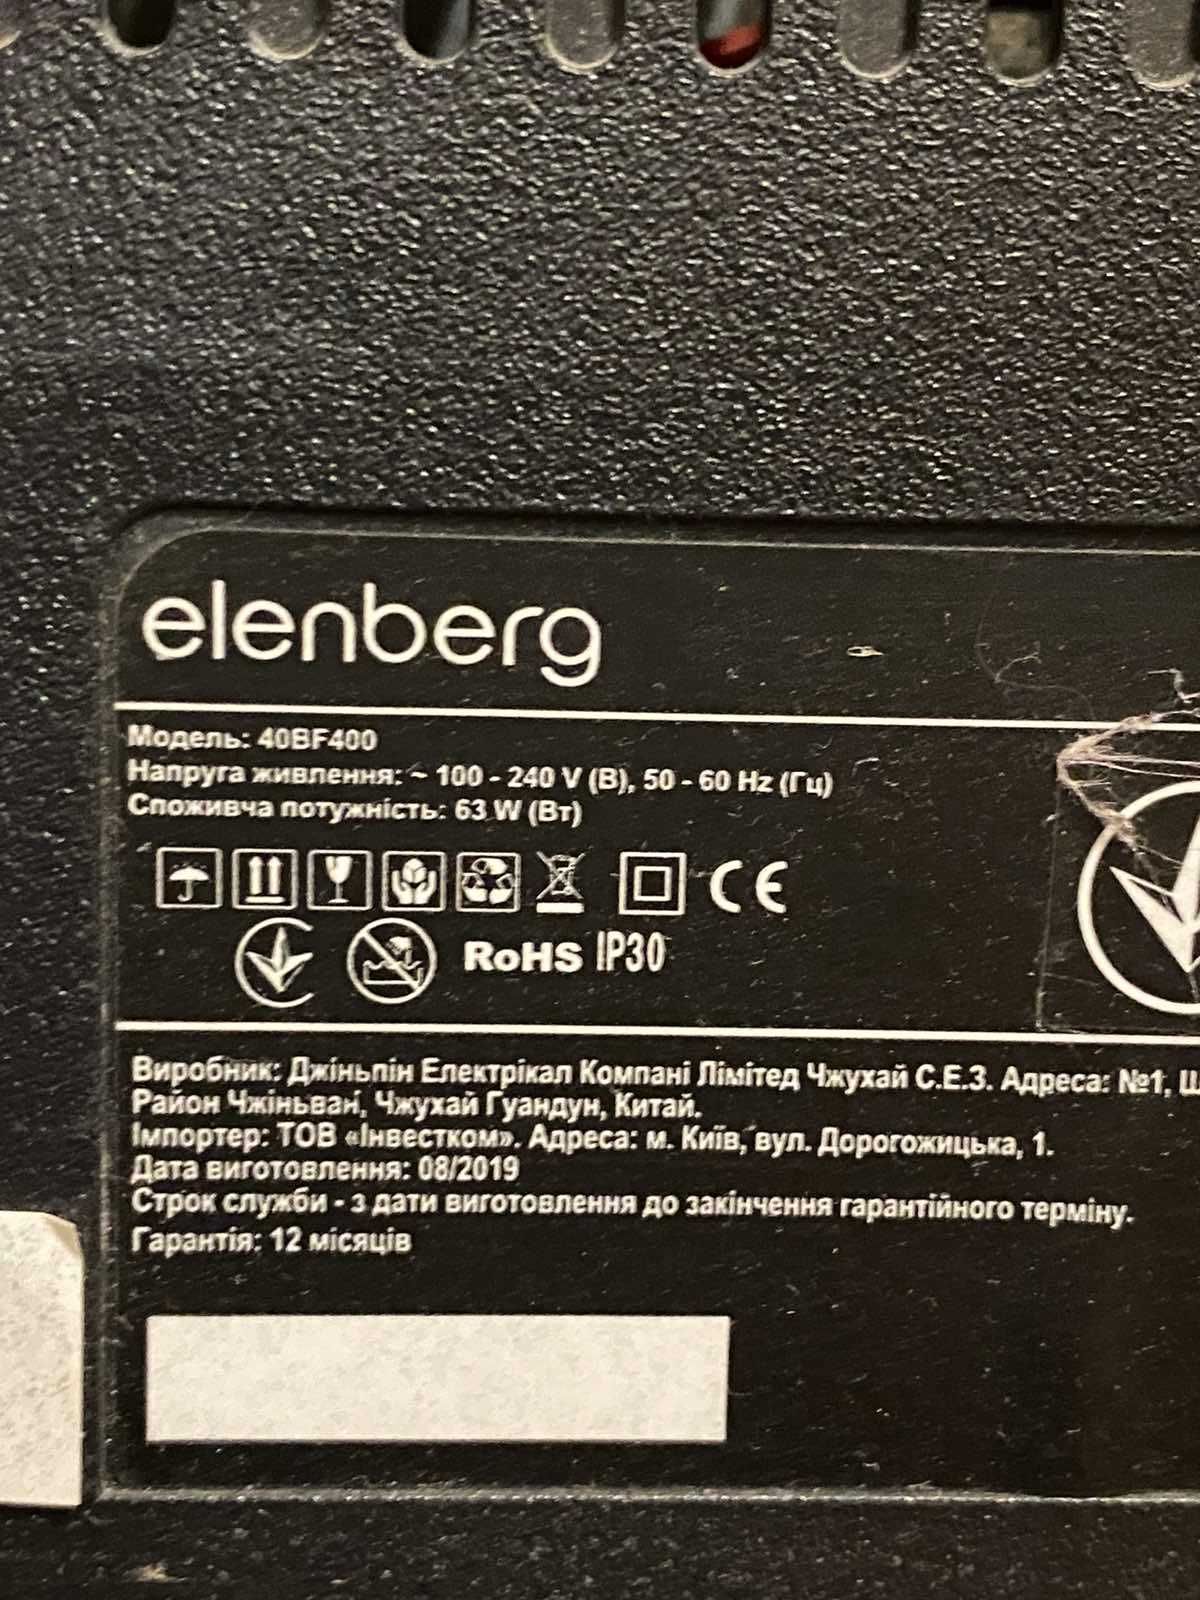 Elenberg 40bf400